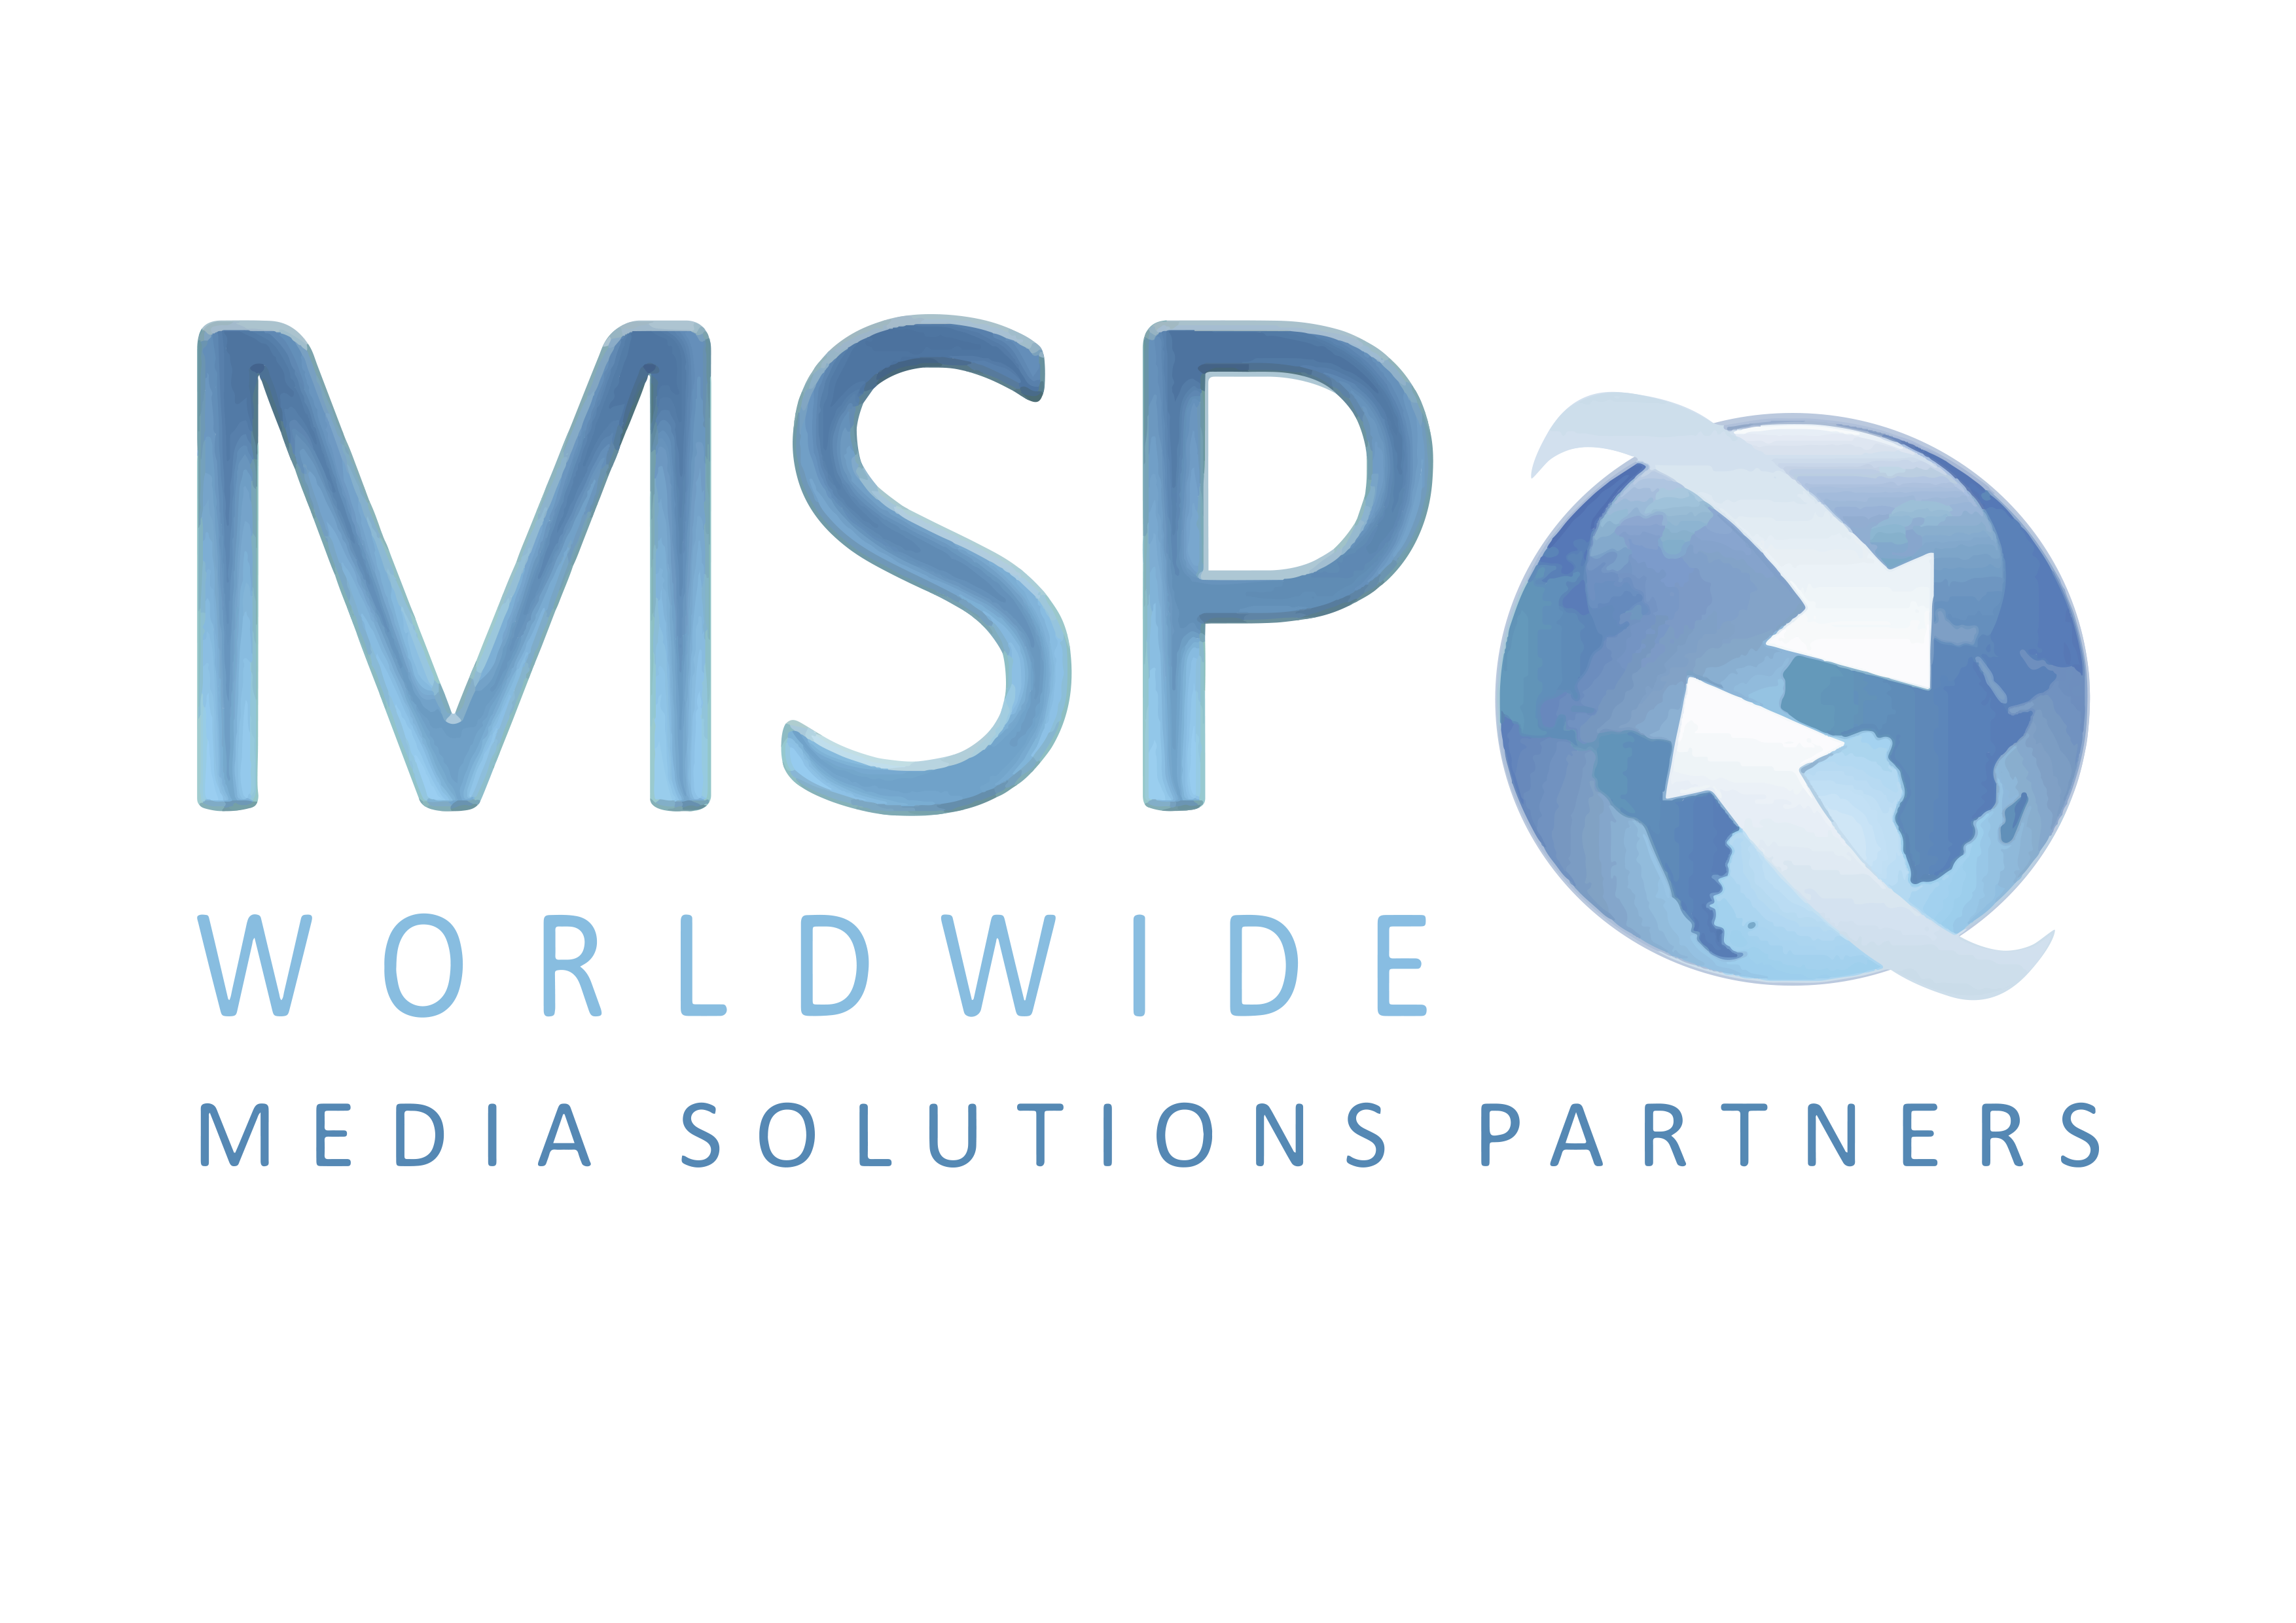 Media Solutions Partners